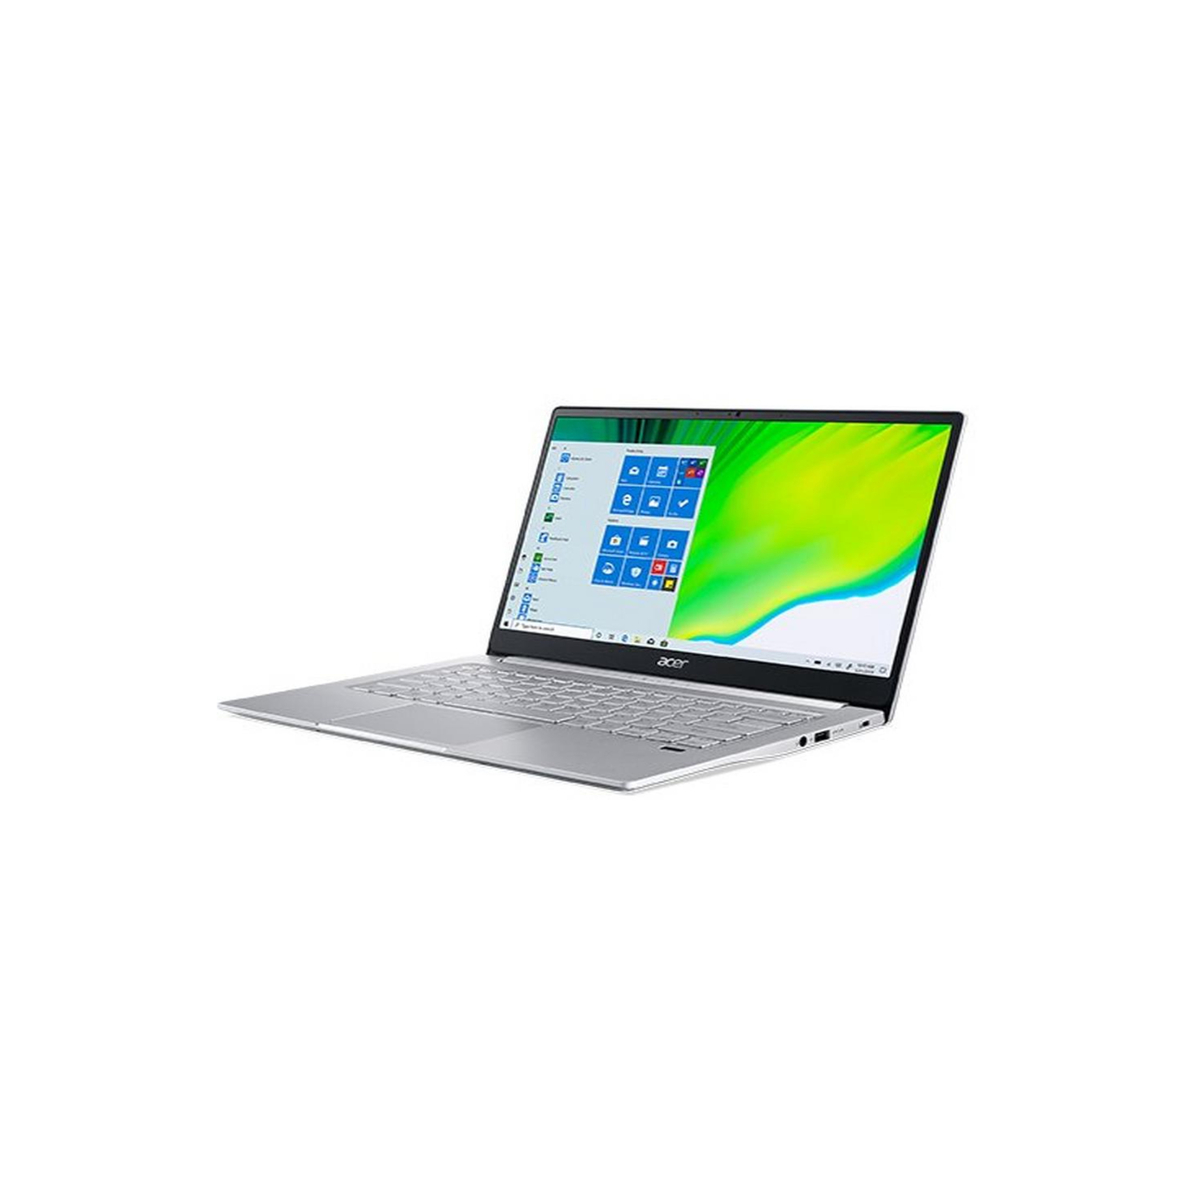 Acer Swift 3 SF3-NXA0NEM002 Laptop - 11th Gen Intel Core i5-1135G7, 14 inches FHD Display, 8GB RAM, 512GB SSD, Intel Iris Xe Graphics, Silver